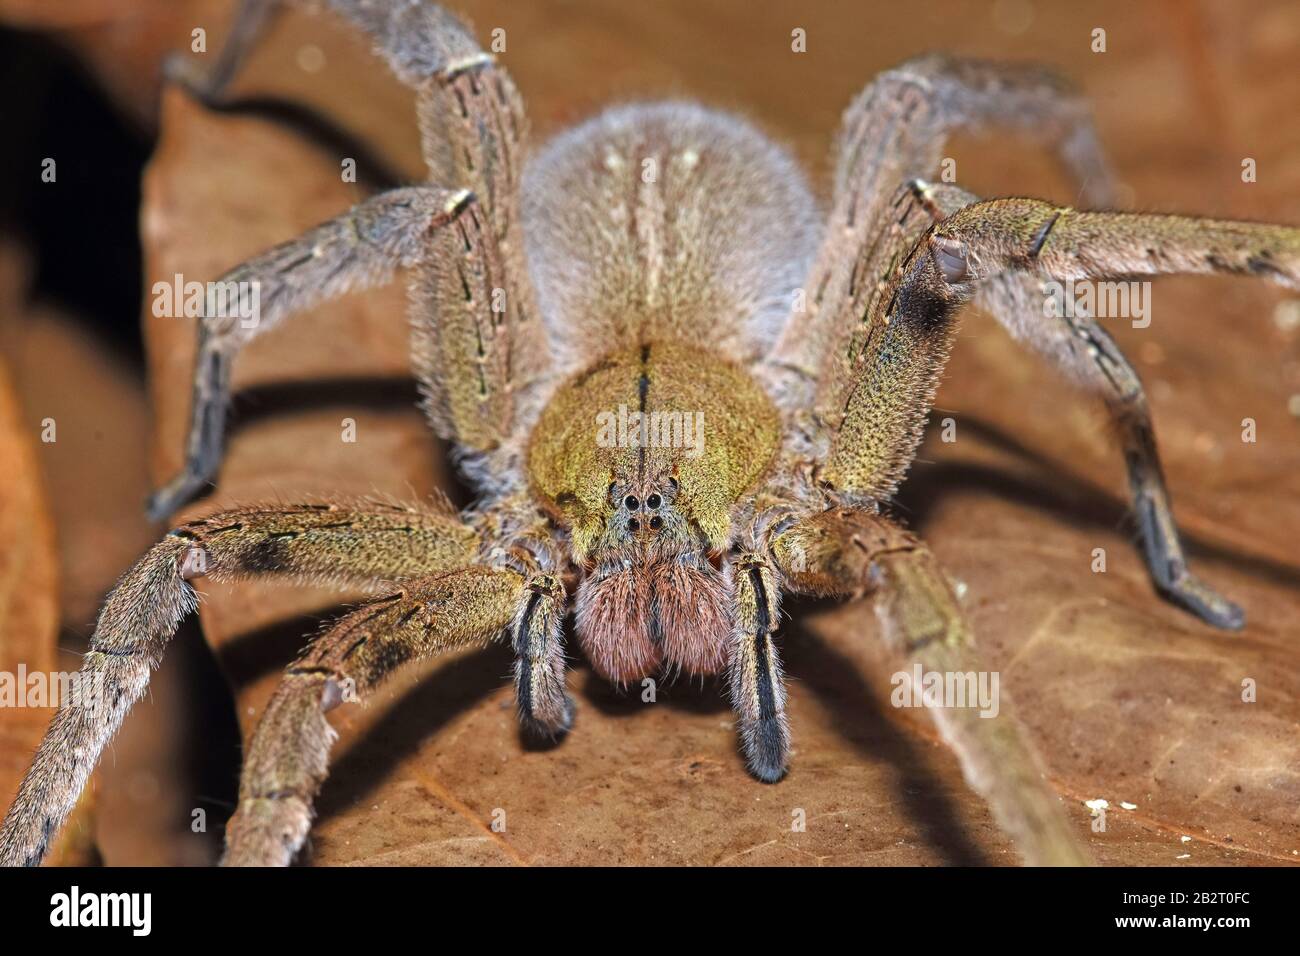 Brazilian Wandering Spider Stock Photo Alamy